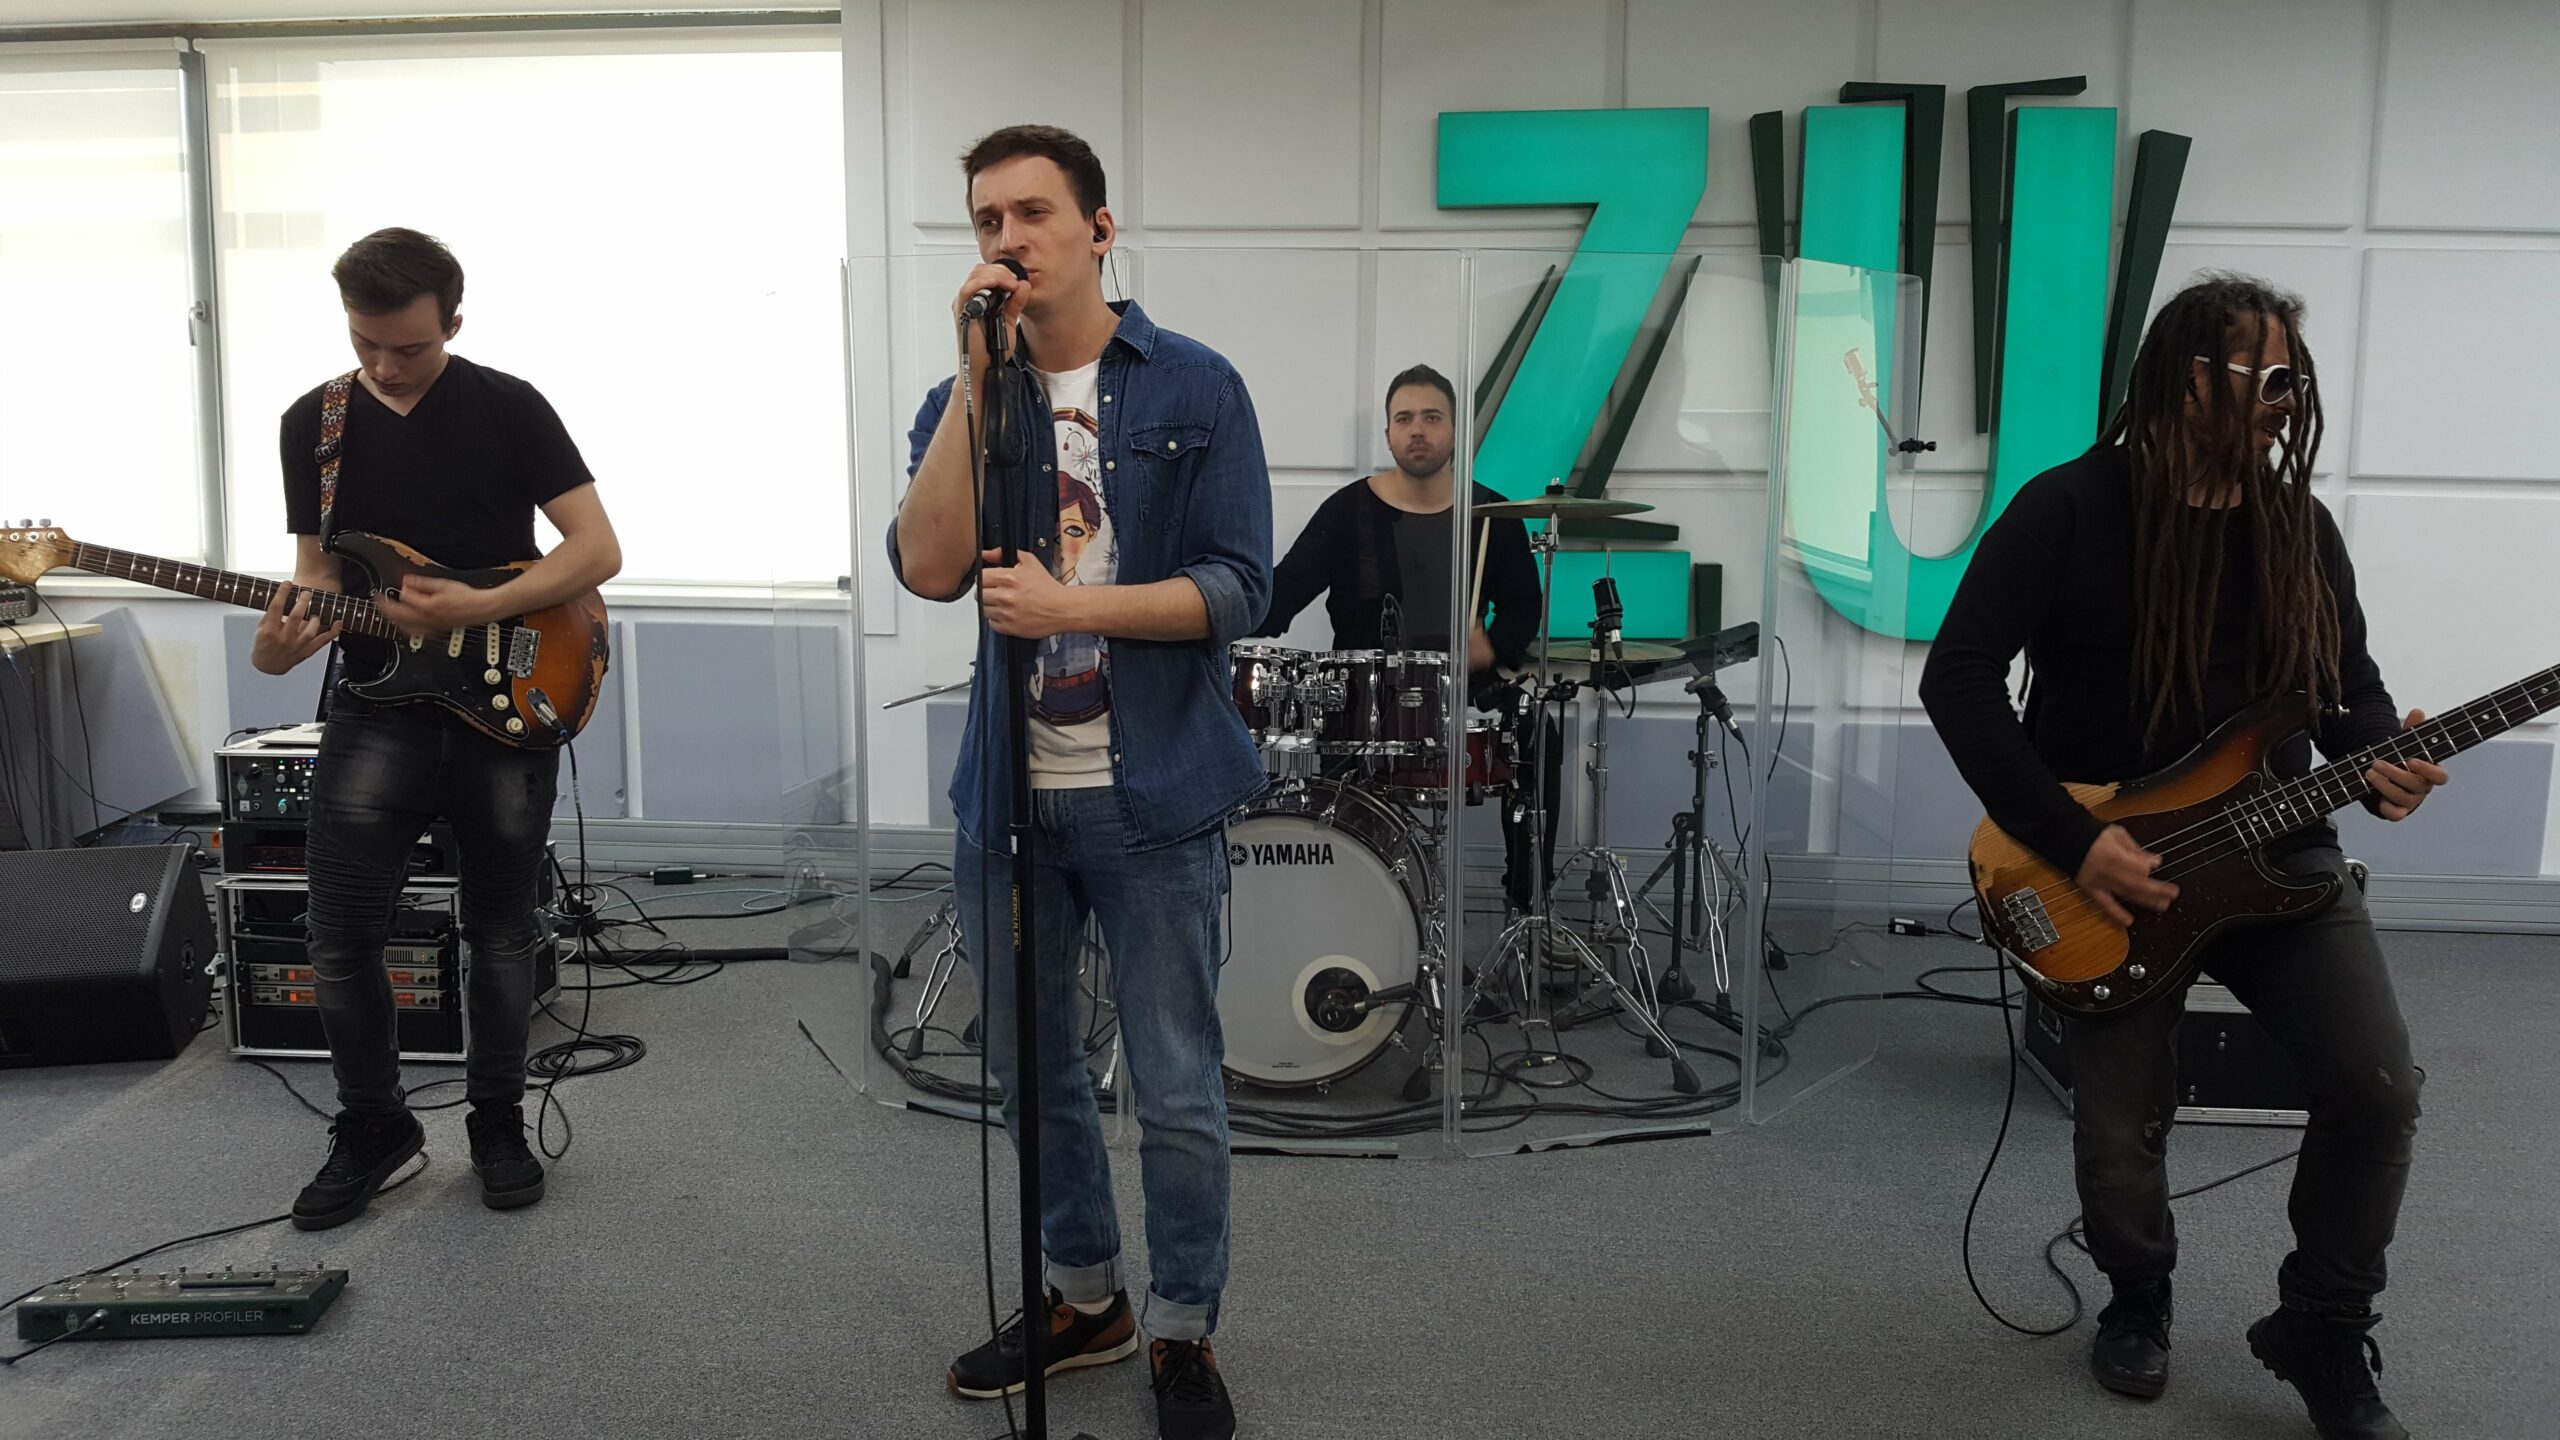 Leapșa Forza ZU: The Motans cântă ”Bolnavi Amândoi” și o provoacă pe Irina Rimes